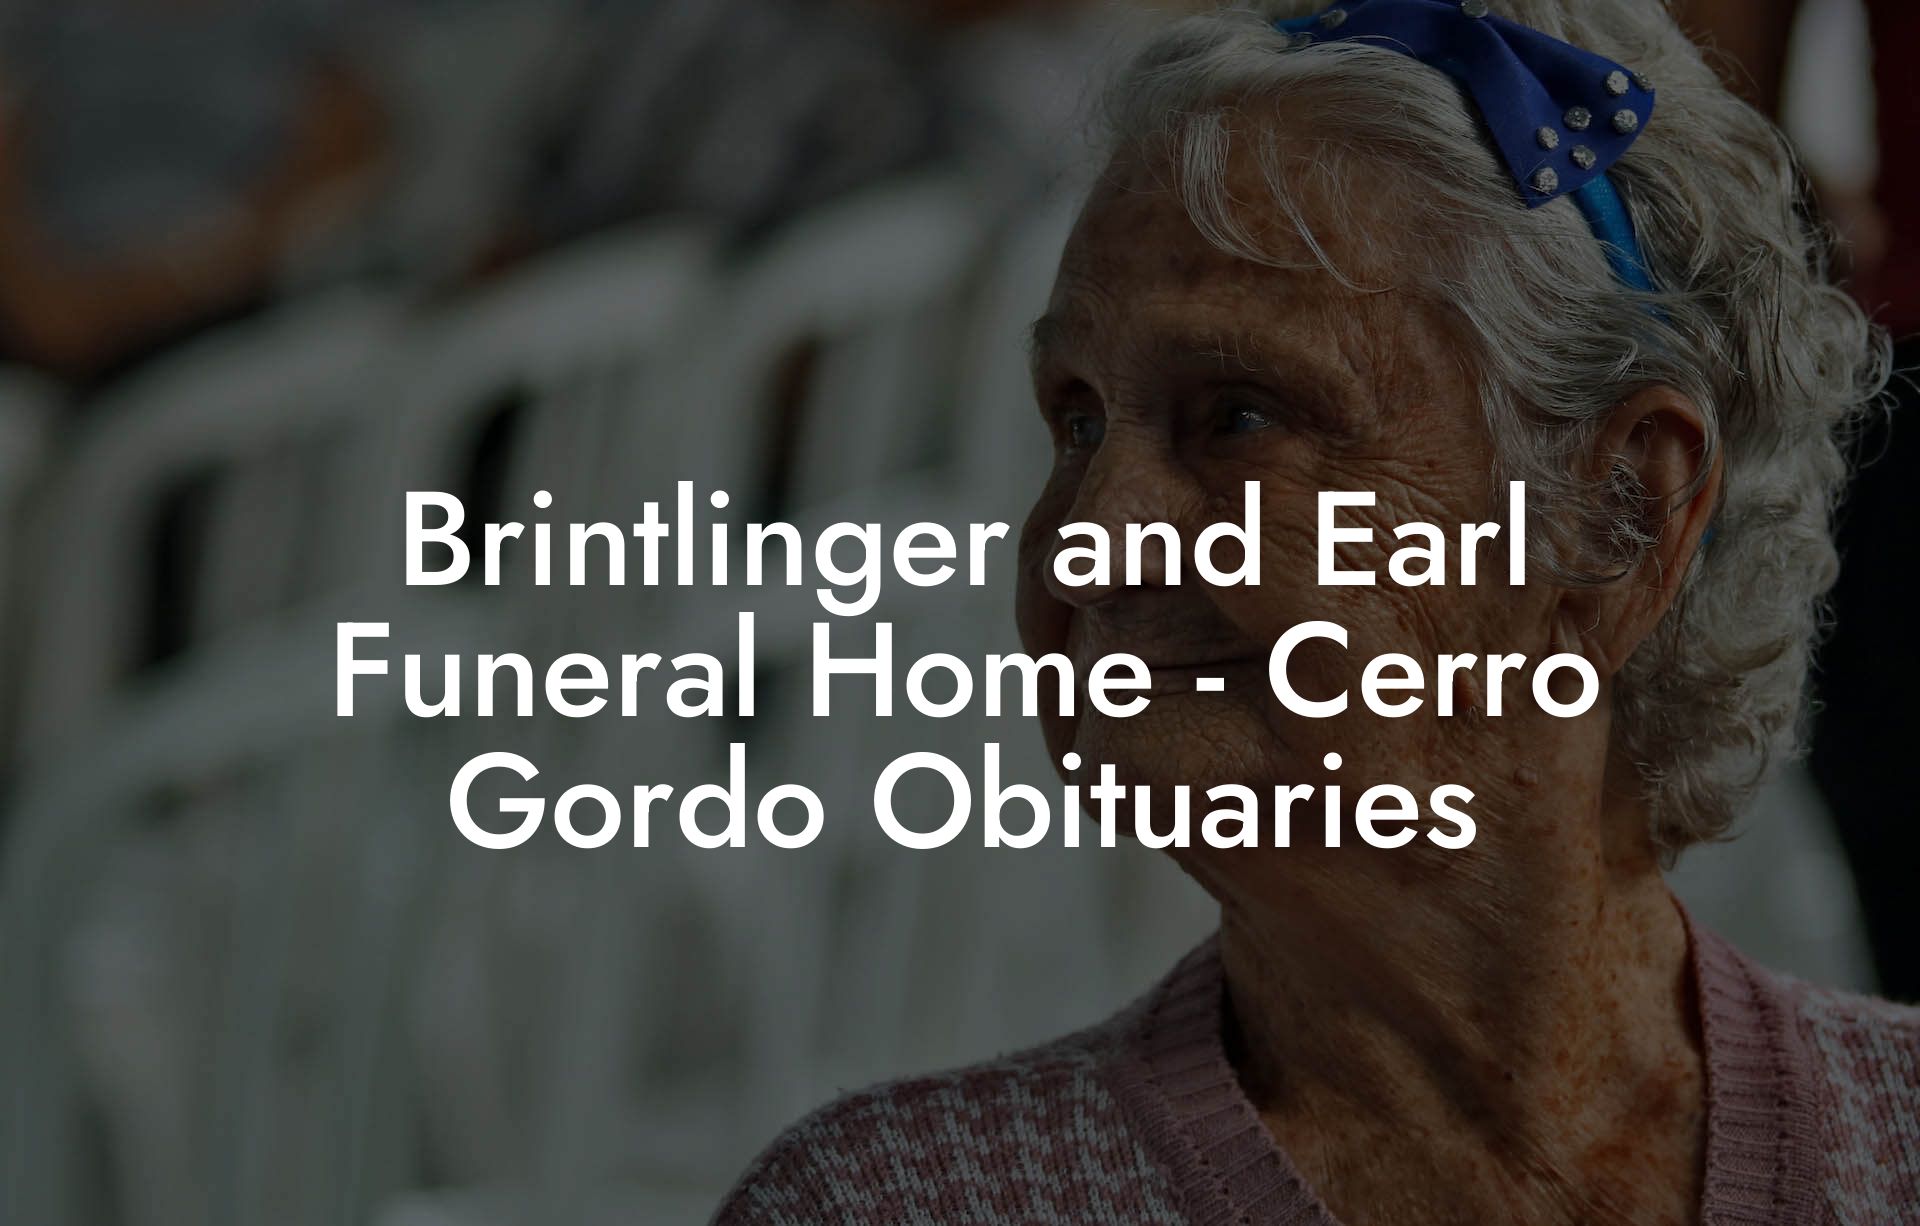 Brintlinger and Earl Funeral Home - Cerro Gordo Obituaries